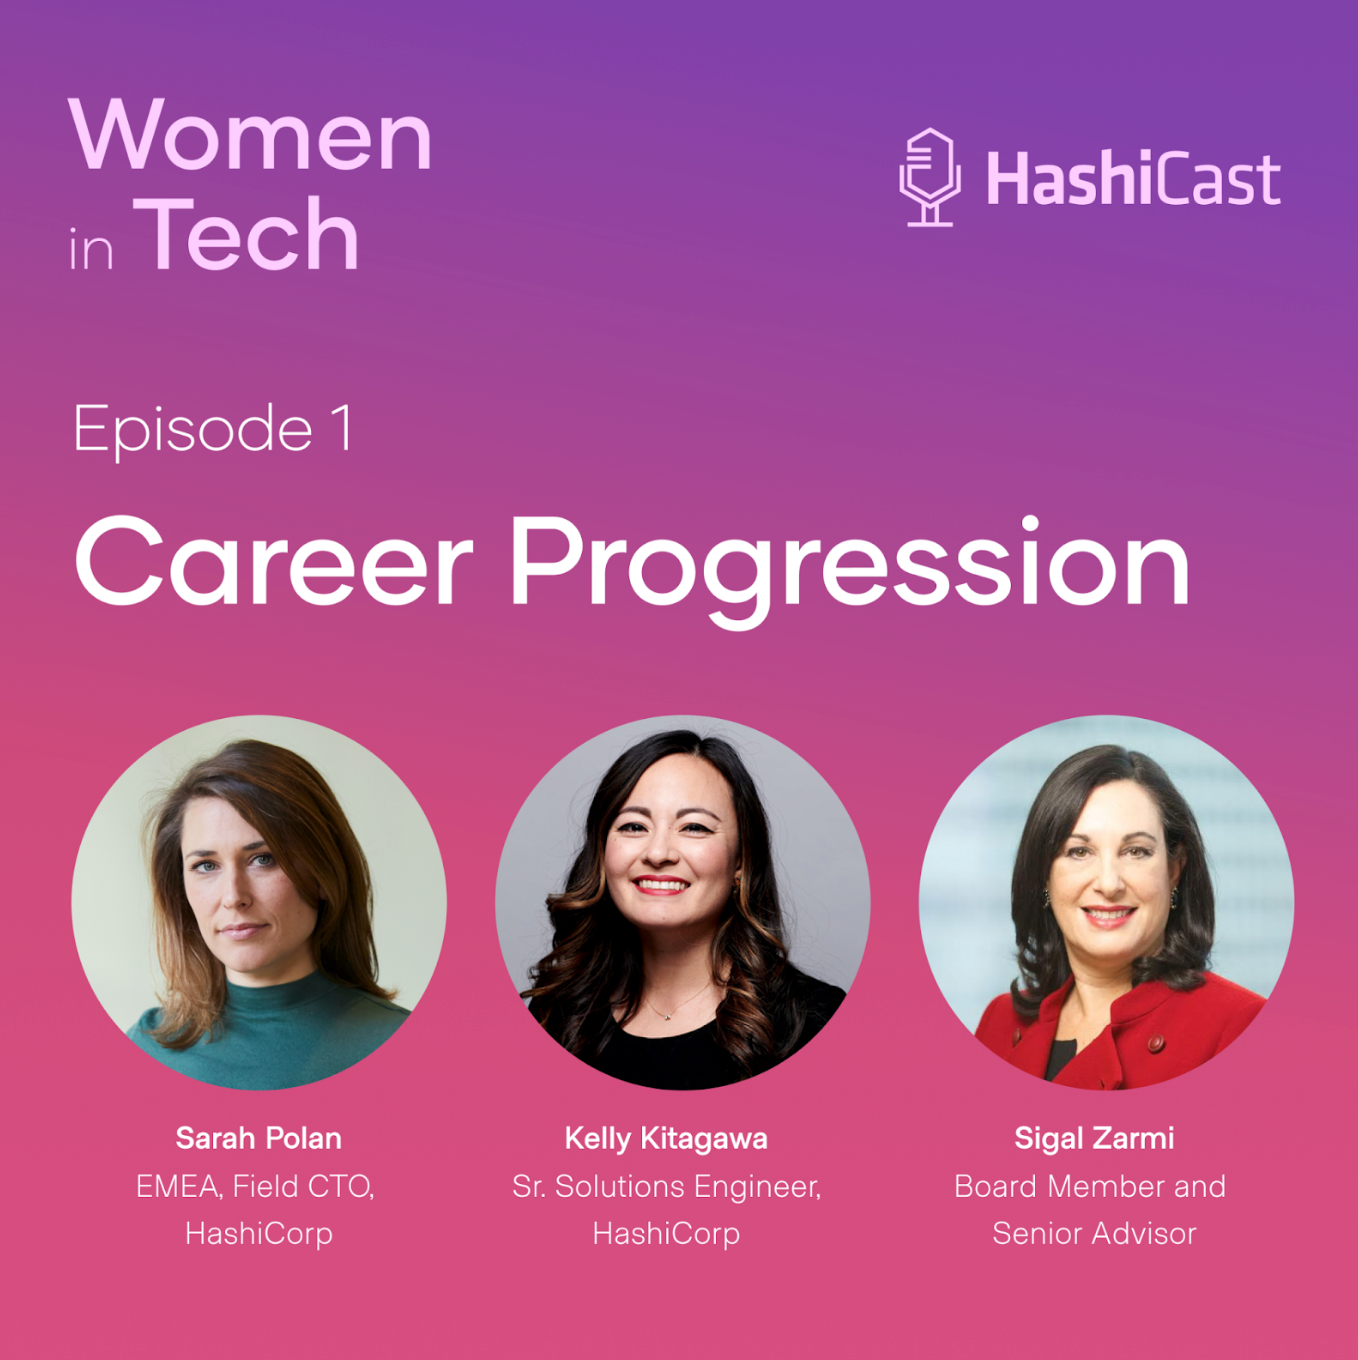 Women in Tech podcast episode 1: Career Progression